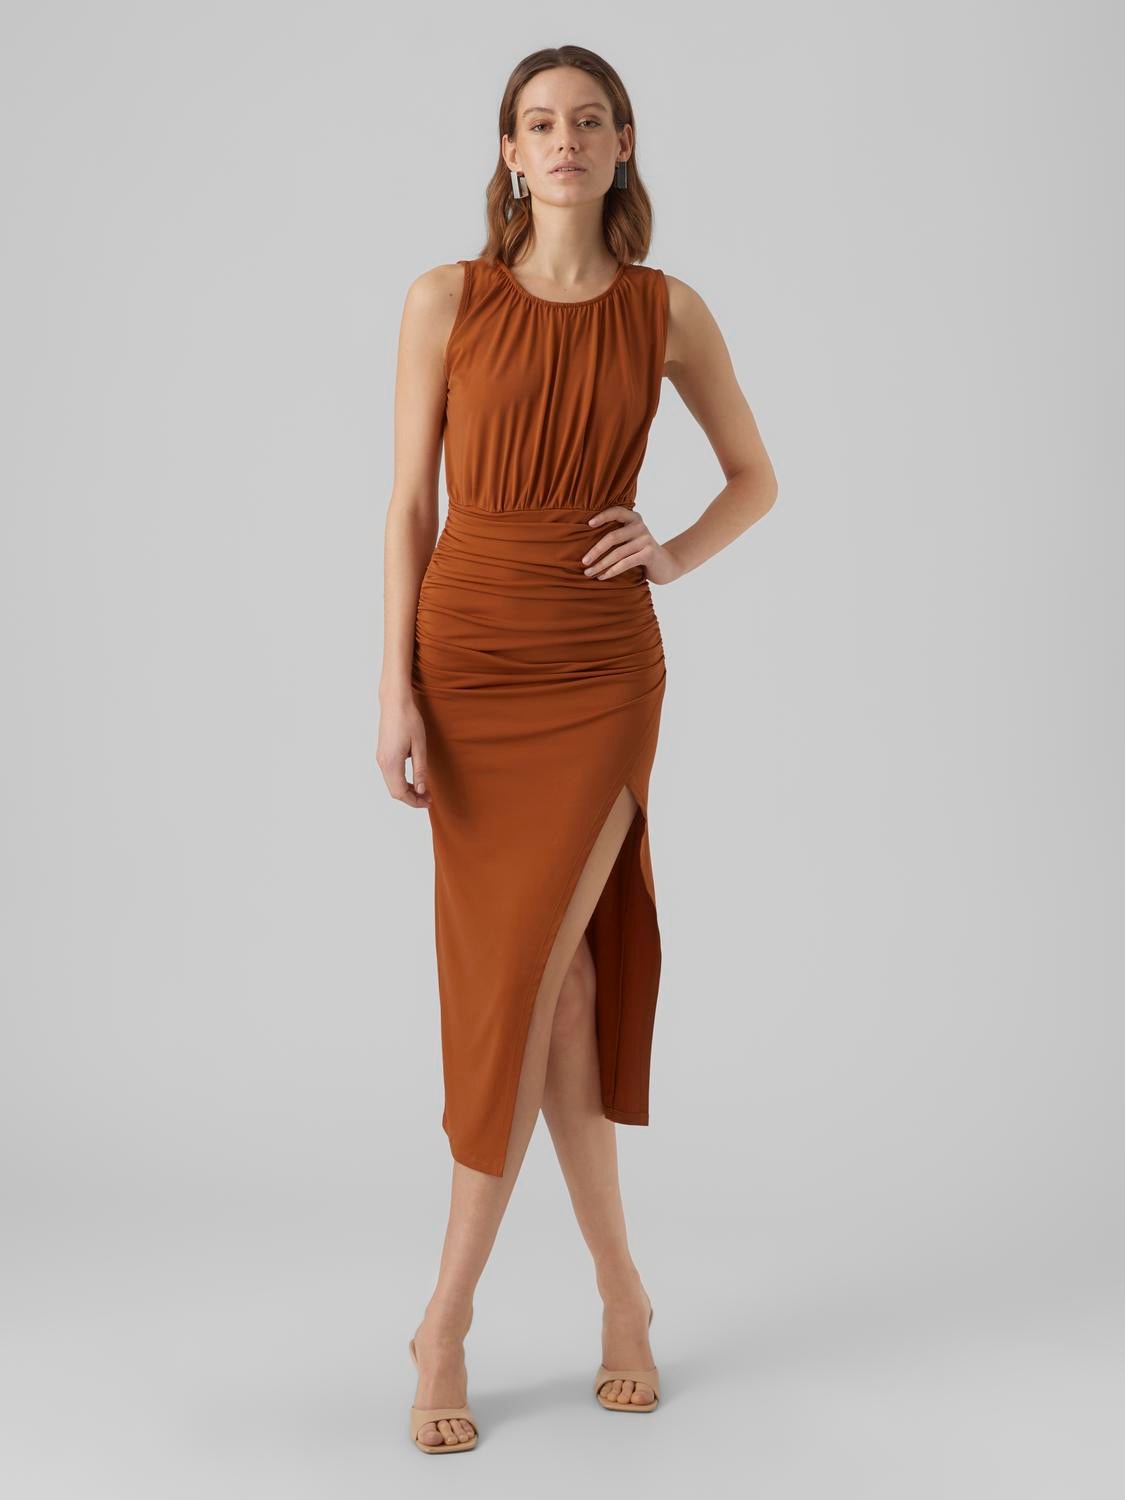 Knikken verlangen esthetisch Lange jurk | Donkerbruin | Vero Moda®